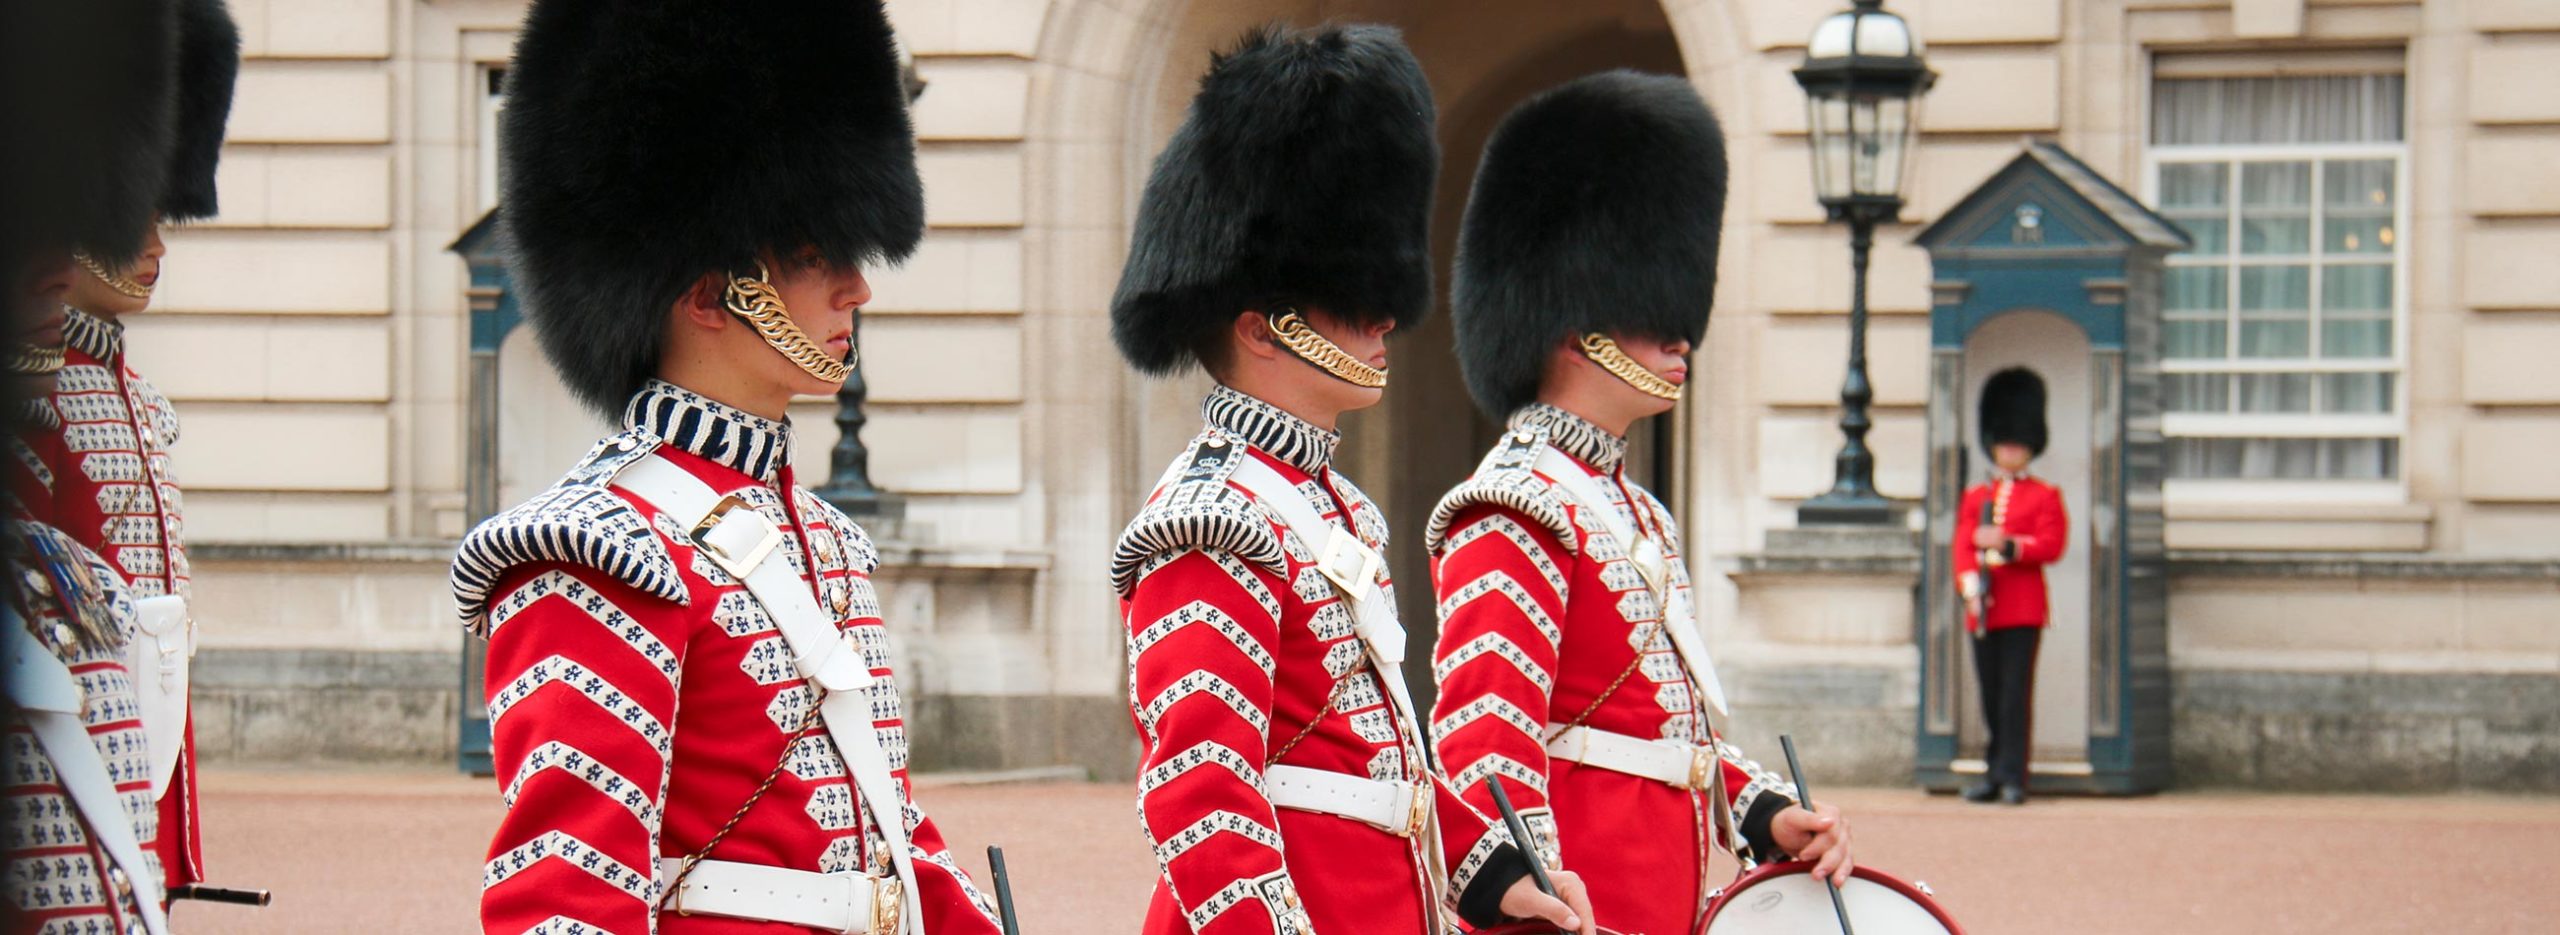 Relève de la garde, Palais de Buckingham, Londres, Angleterre / Changing of the Guard, Buckingham Palace, London, England, Uk